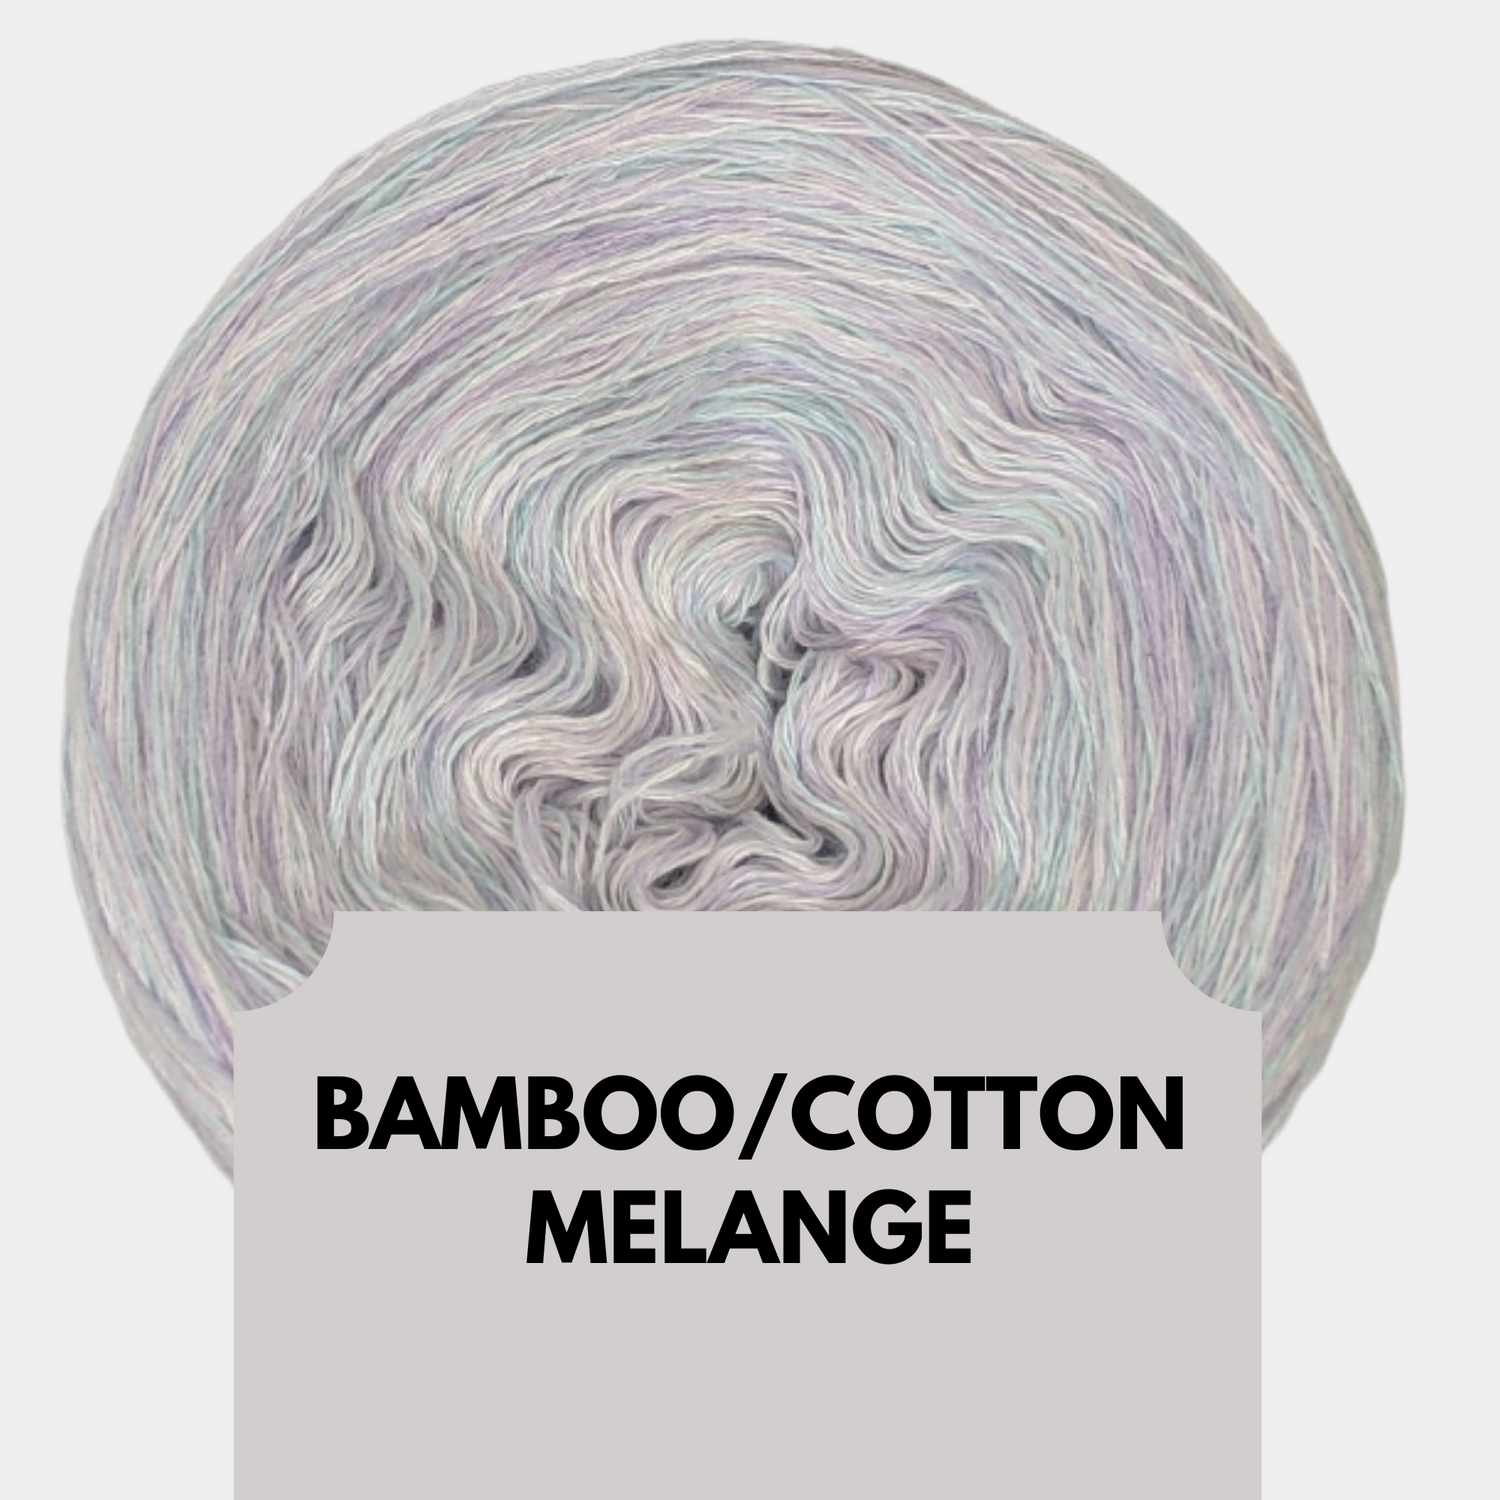 Bamboo/Cotton Melange